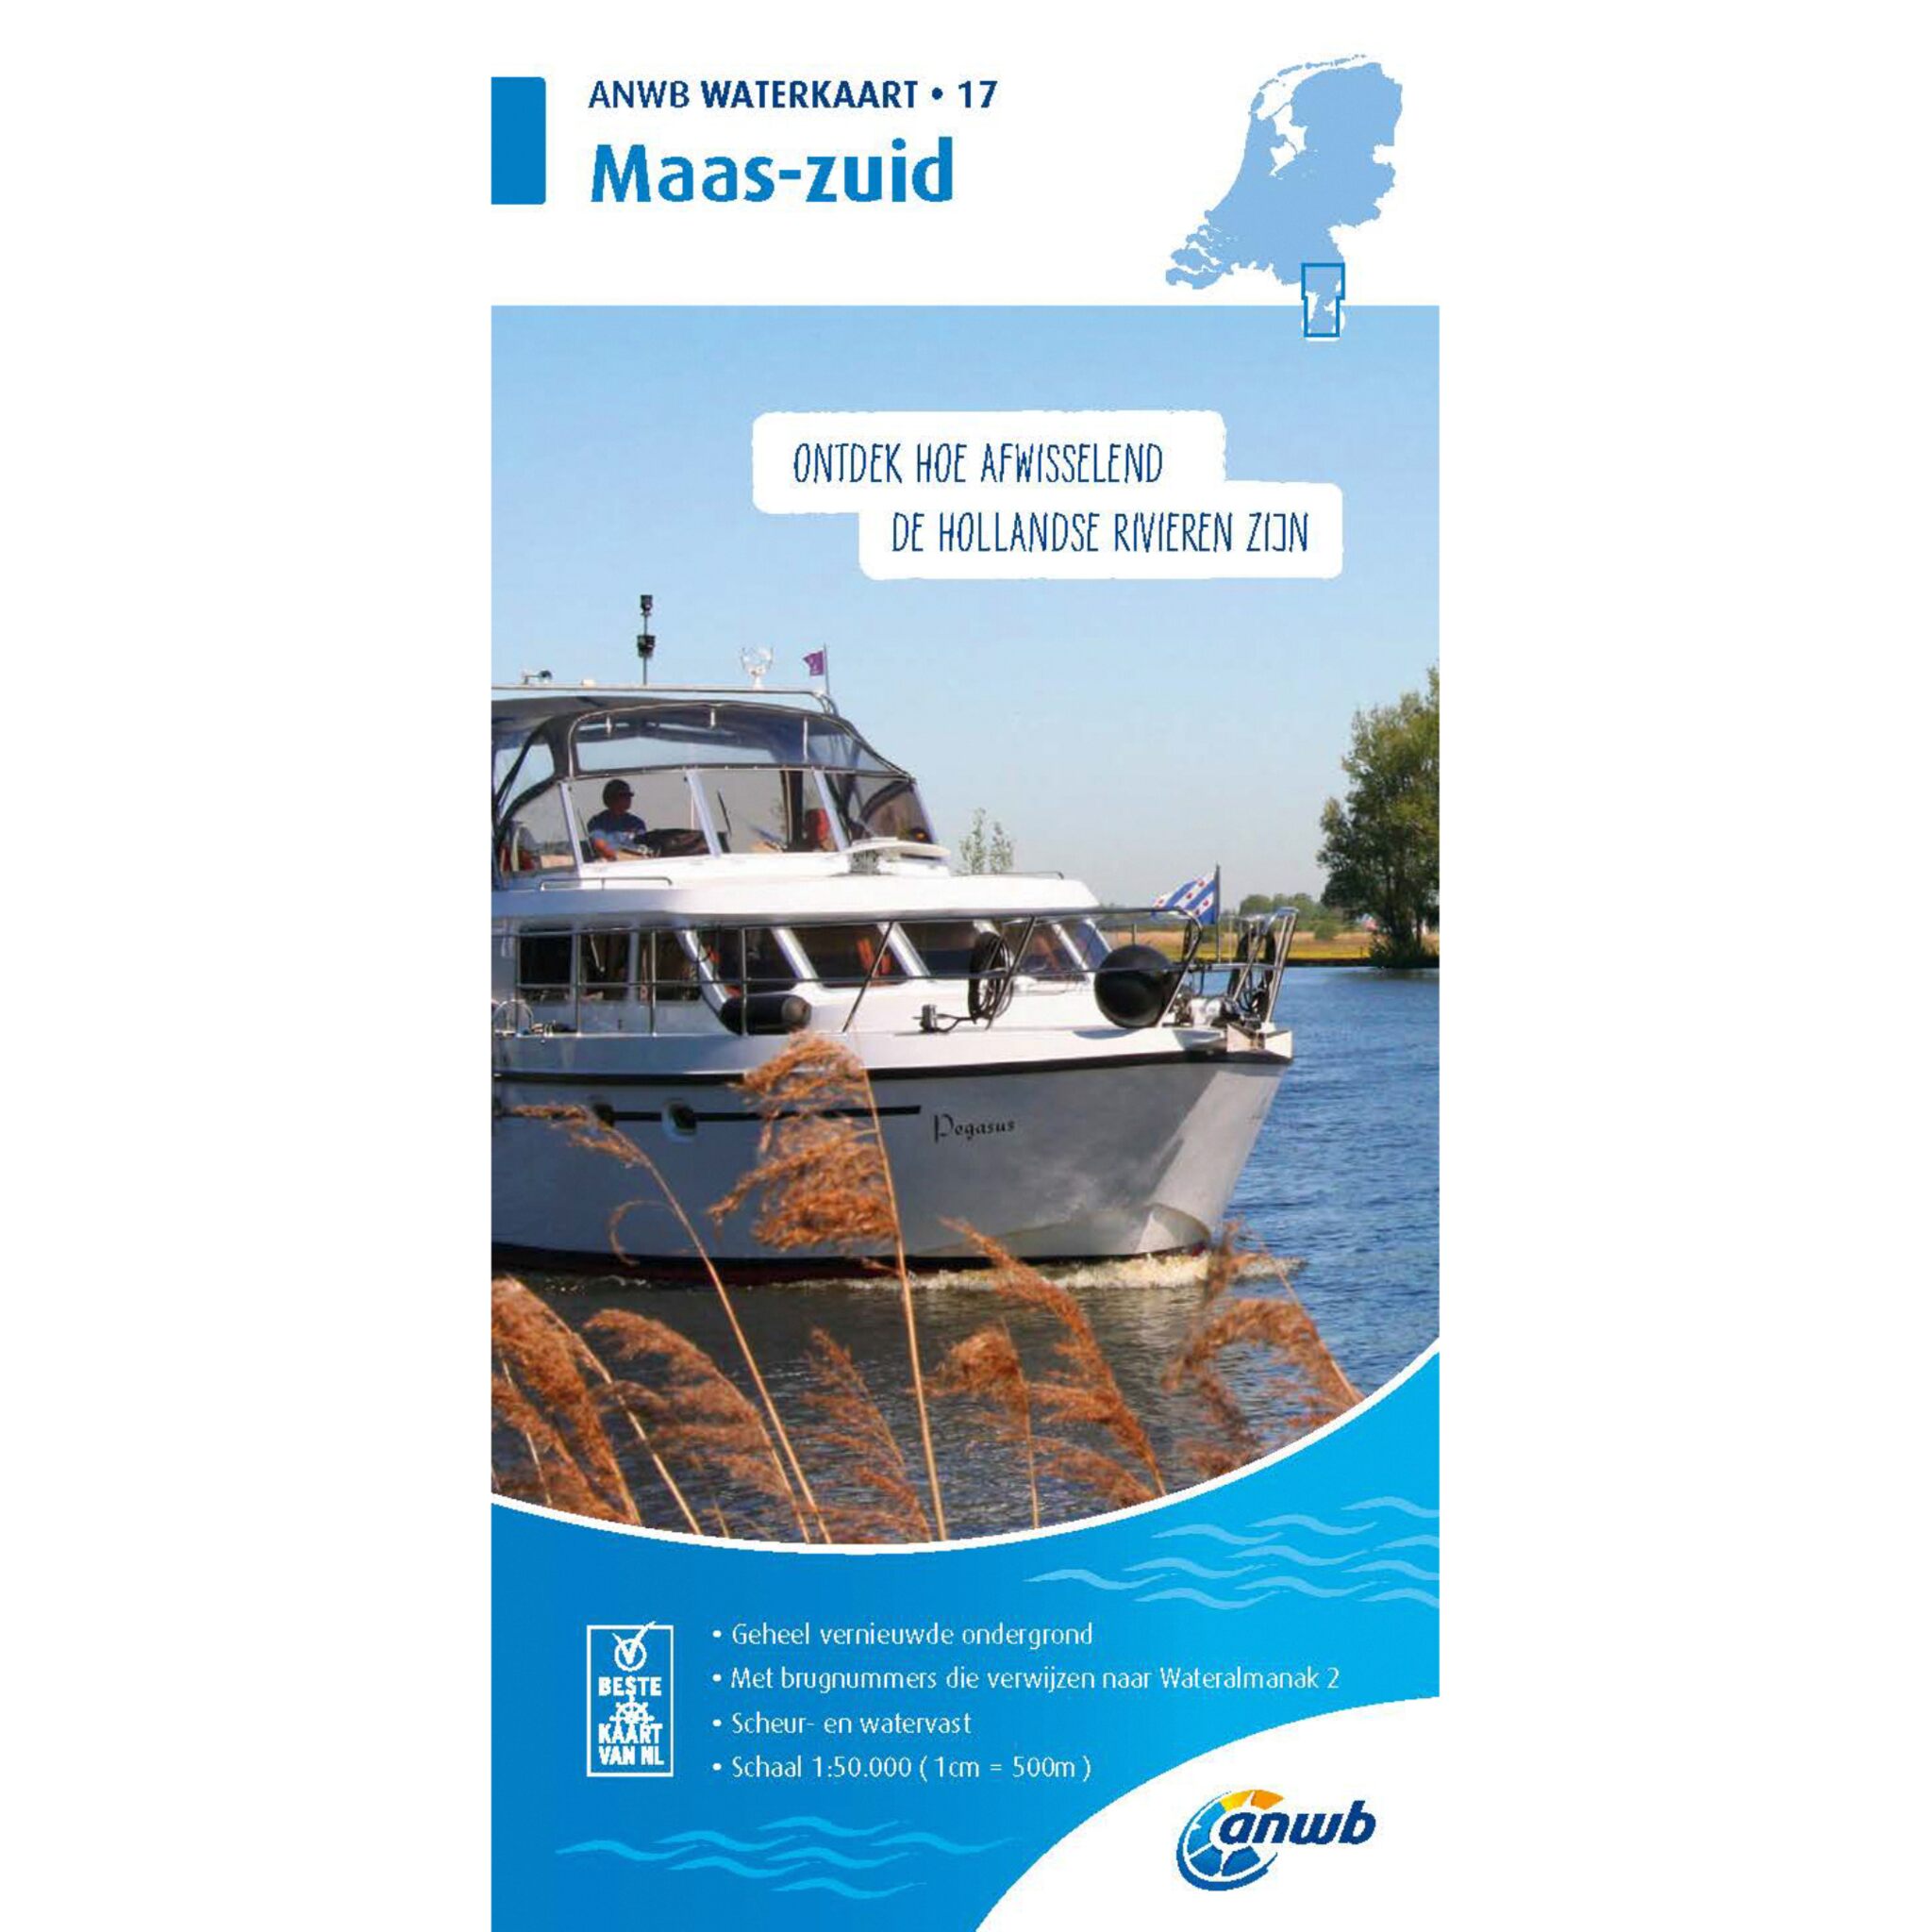 Waterkaart 17 Maas-Zuid 2019